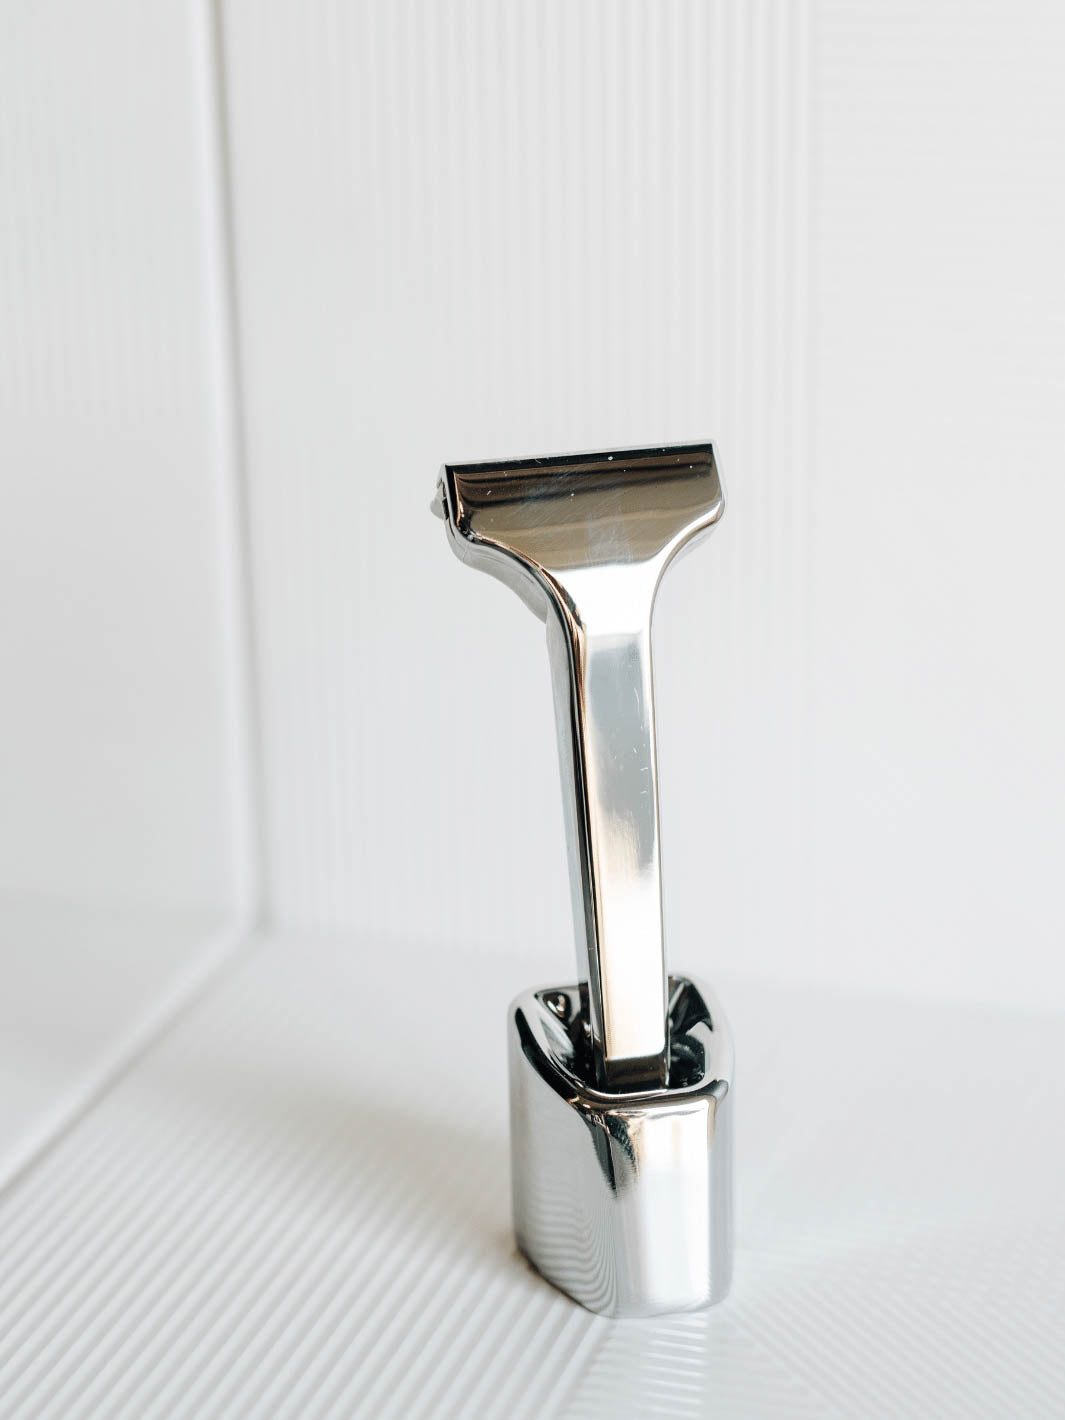 Bathroom Shelf Razor Stand Wall Razor Holder Shower Razor Blade